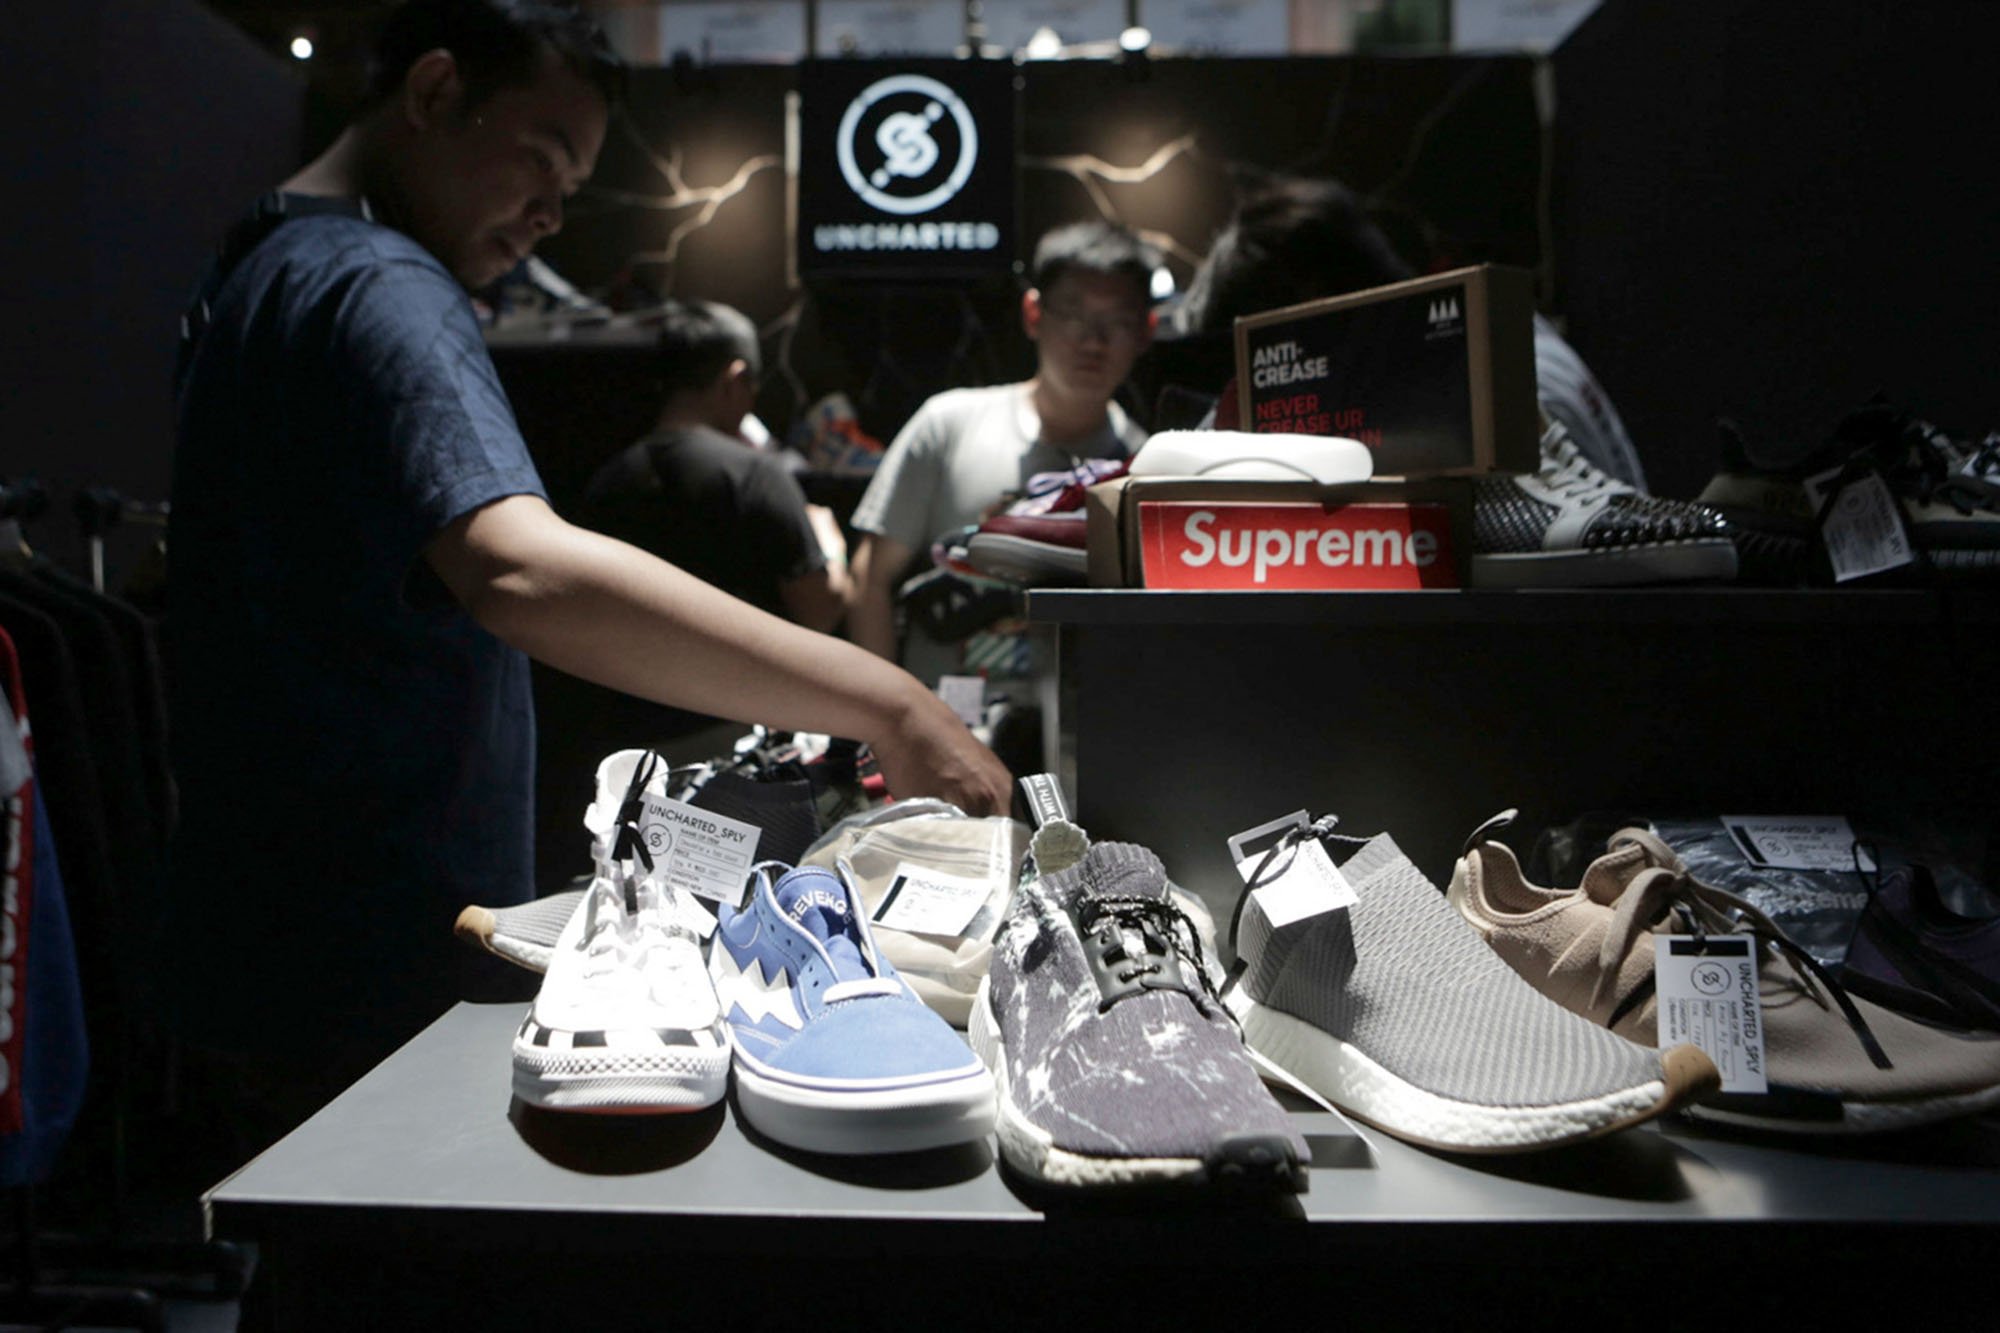 Seorang pengunjung memegang sepatu di salah satu both dalam bazar Urban Sneaker Society di ke Plaza Gedung District 8, SCBD, Jakarta Selatan (08/11/2019). Terdapat beberapa brand sepatu yang merilis produk hasil kolaborasi eksklusifnya, diantaranya sepatu Compass, Untold, Rafheoo Footwear, hingga G-Shock. Selain itu, ada pula kolaborasi eksklusif seperti ublic Culture, FR2 (Fxxcking Rabbit), Atmos, hingga Round Two by Sean Wotherspoon.